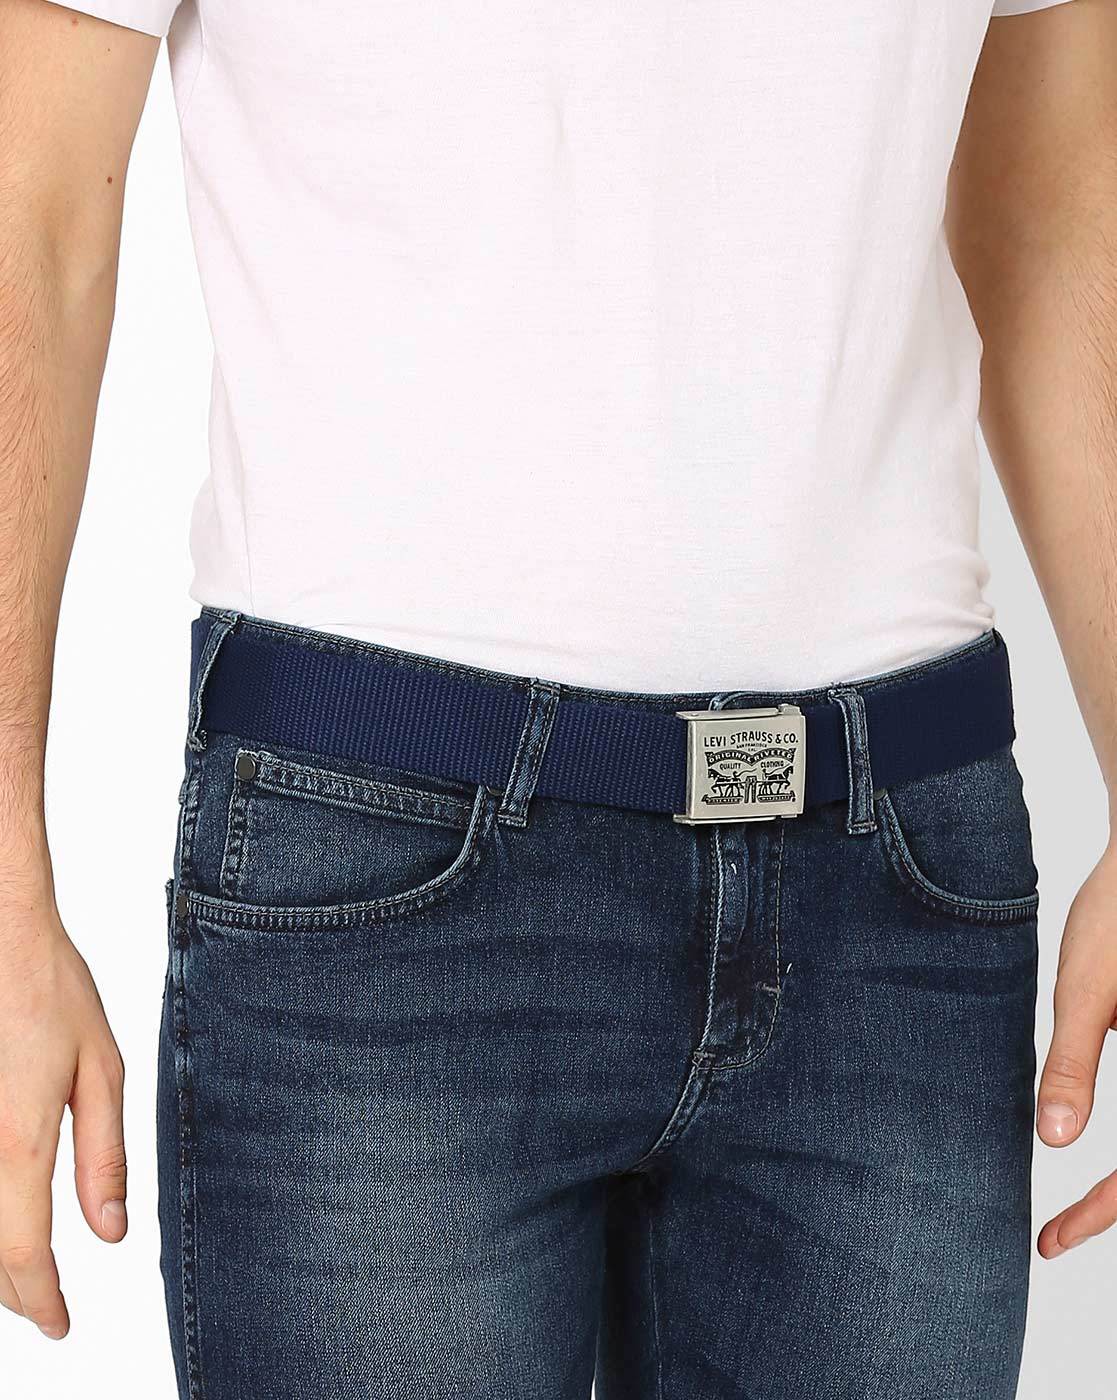 Buy Navy Blue Belts for Men by LEVIS Online 